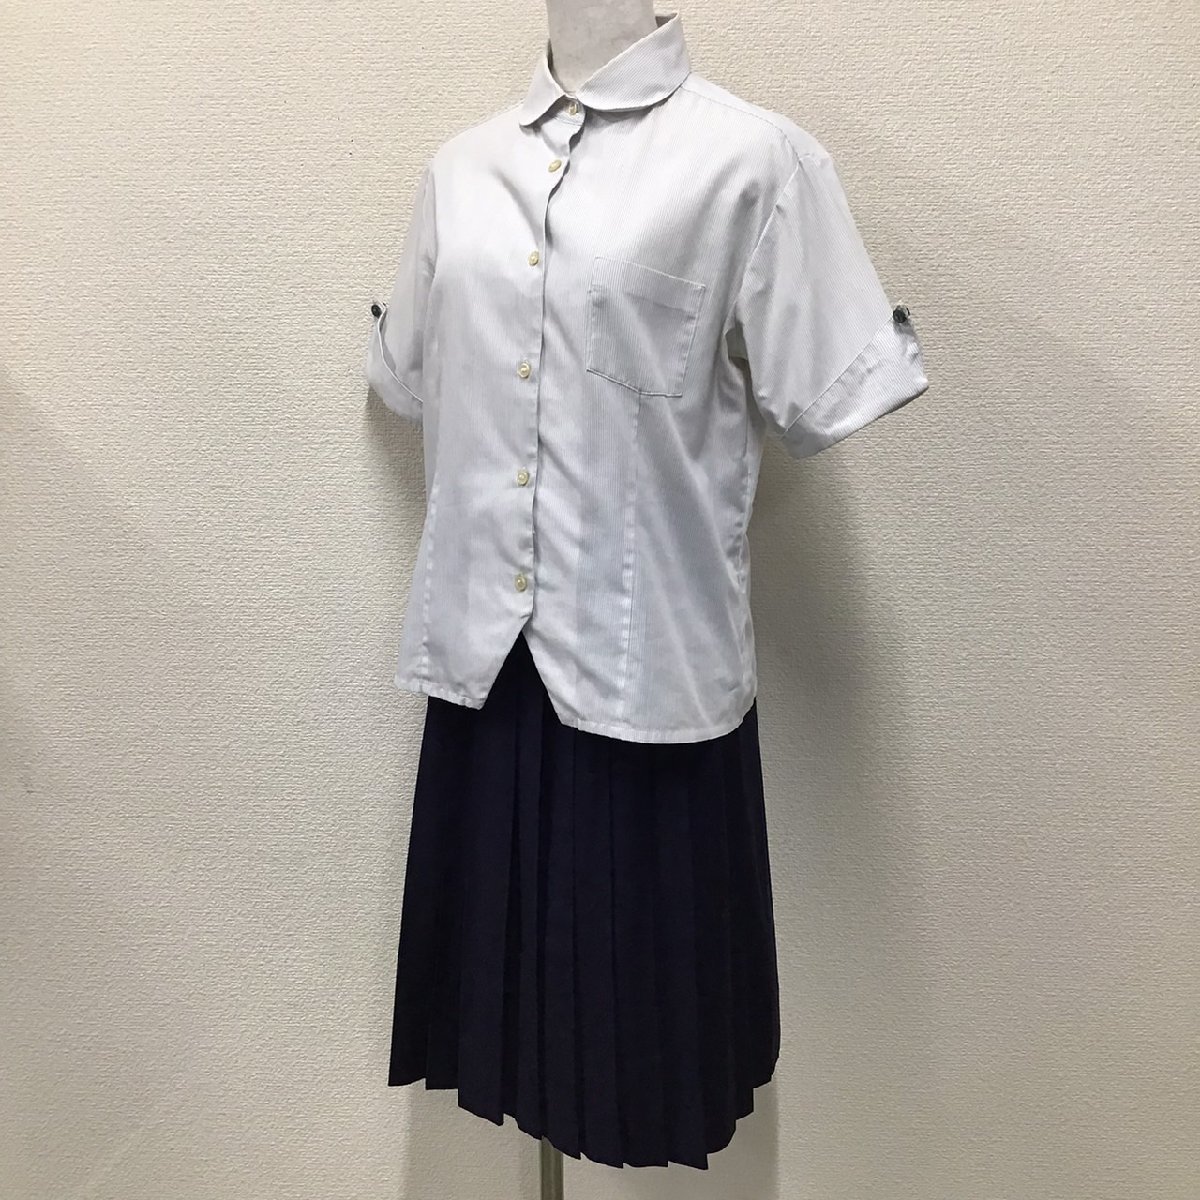 O658 ( used ) Tochigi prefecture work new .. high school ( old uniform ) 2 point set / rare /L/W66/ height 60/ blouse / skirt /Zippy/ short sleeves / uniform / junior high school / high school / woman student / school uniform 